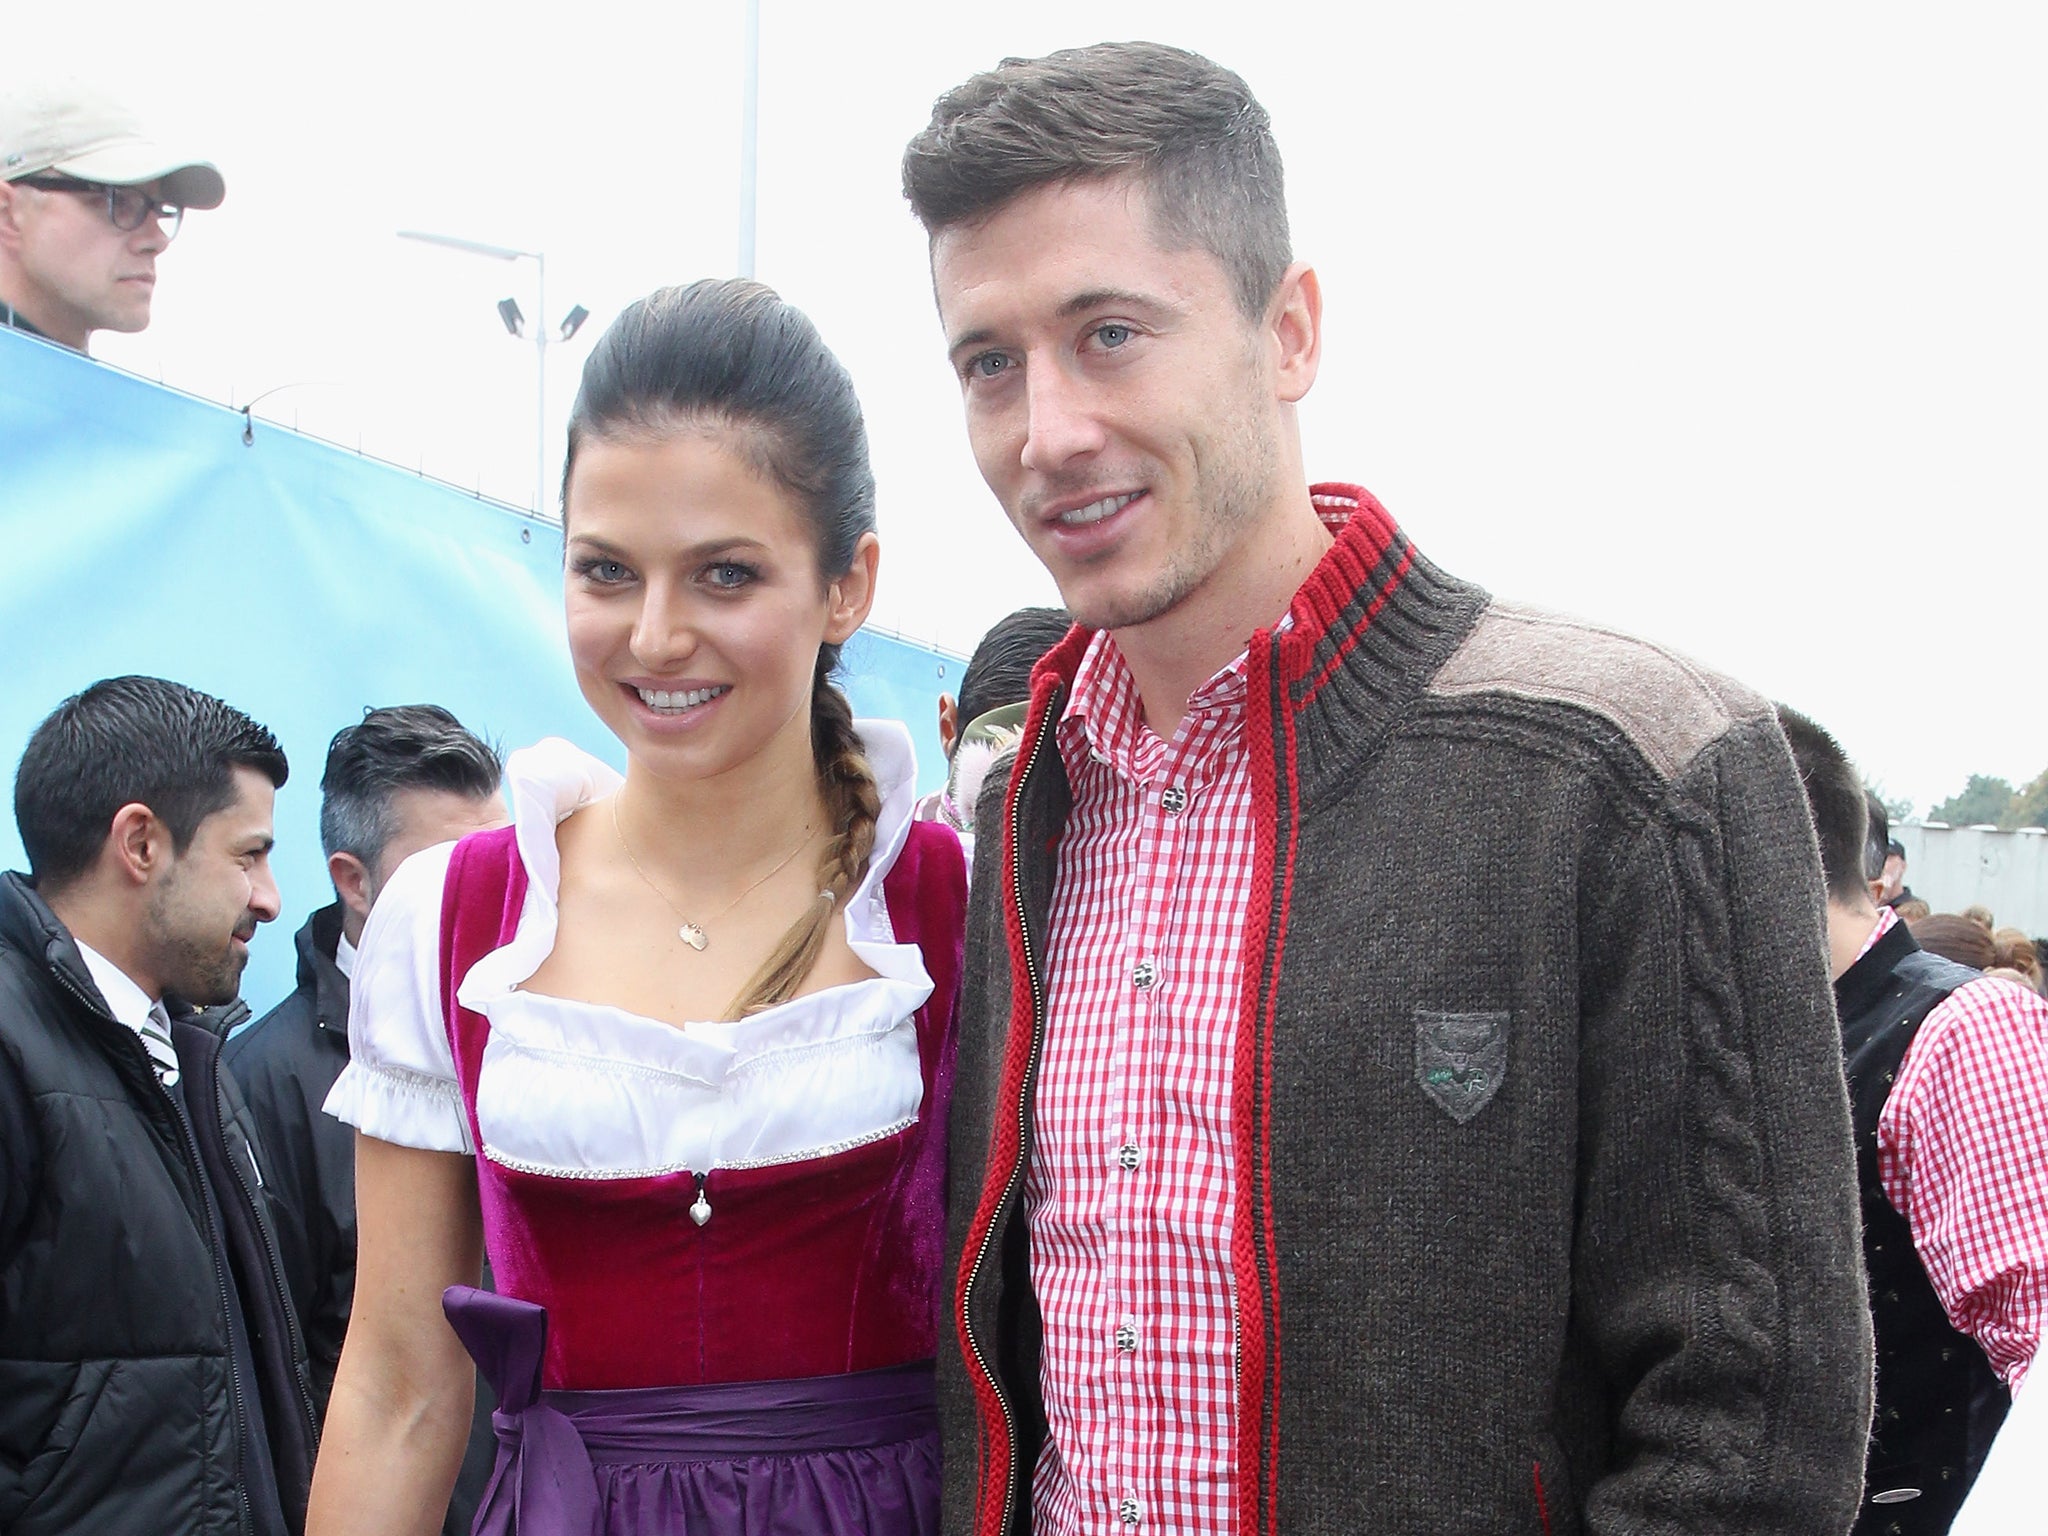 Robert Lewandowski (L) of Bayern Munich and Anna Stachurska